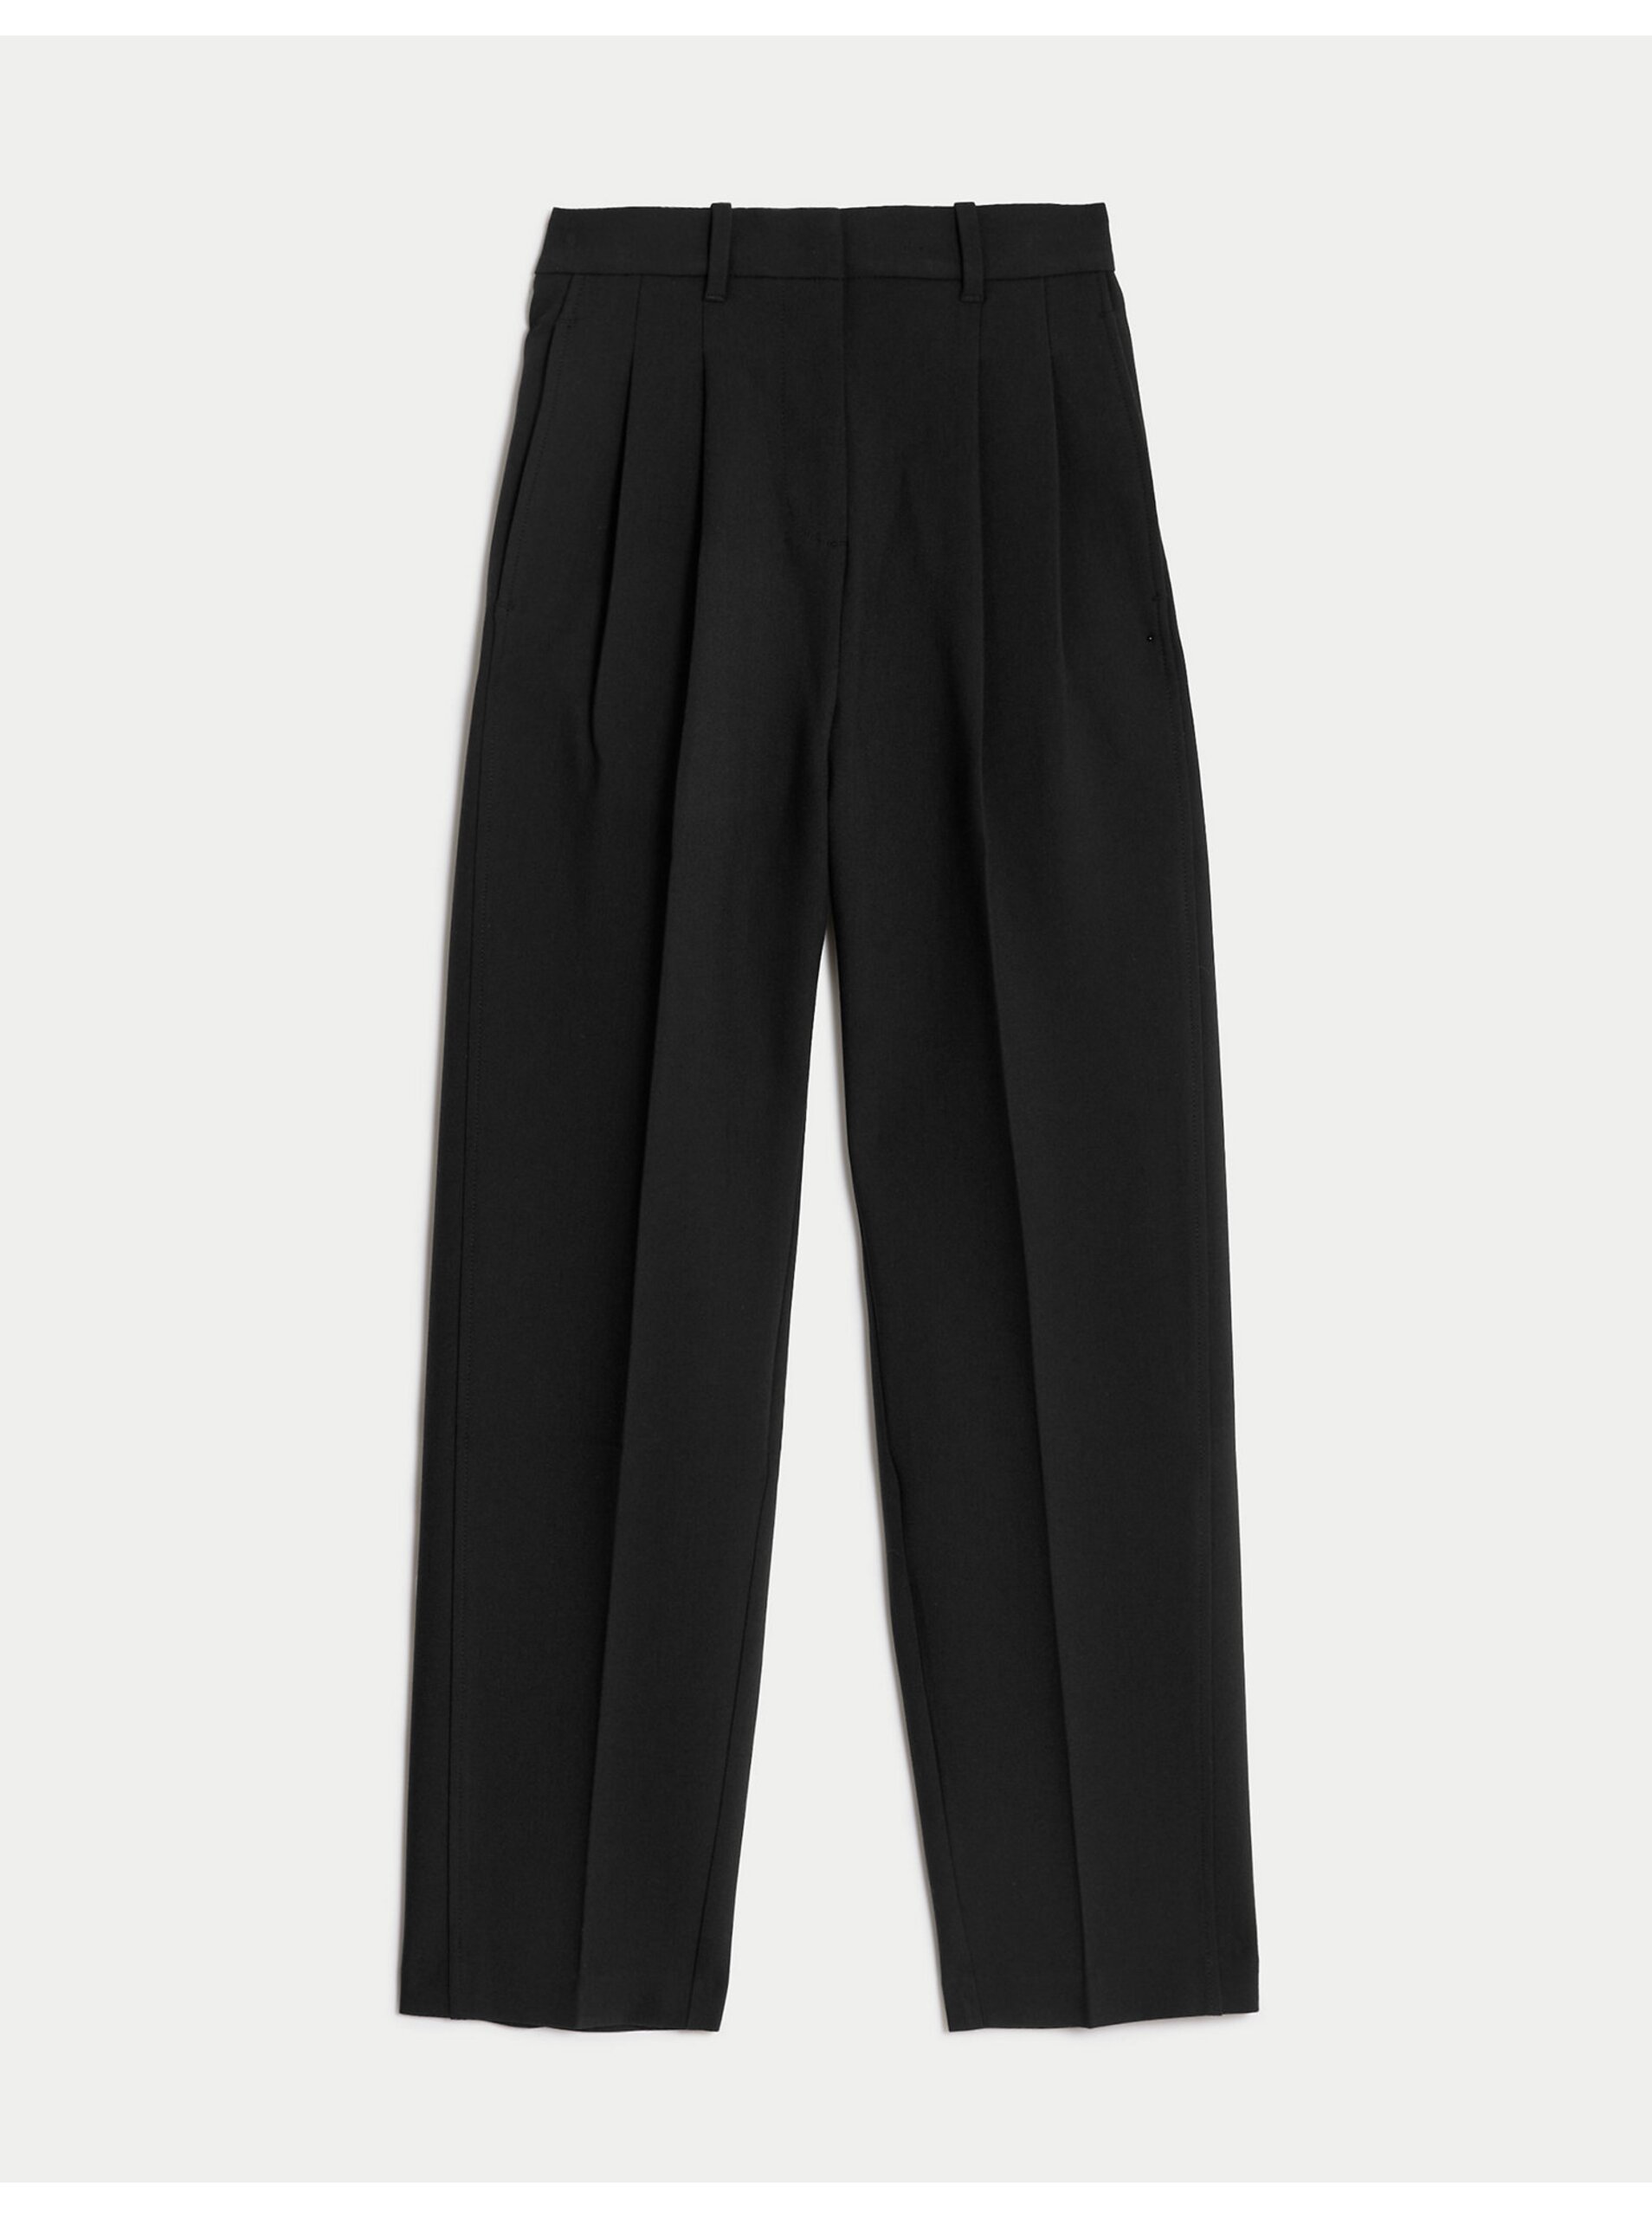 Lacno Čierne dámske nohavice Marks & Spencer